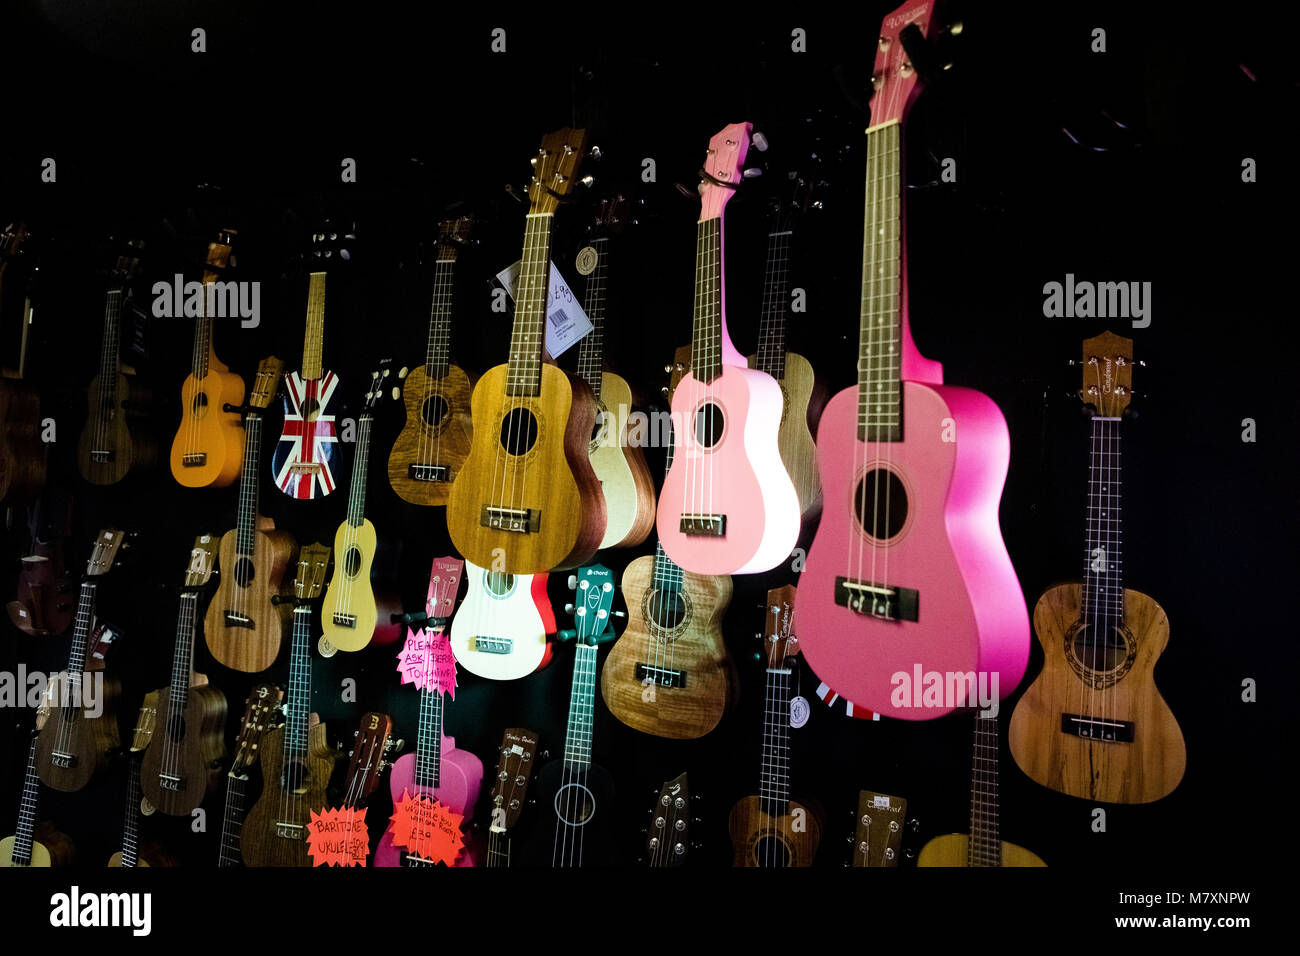 Guitars on sale. Stock Photo